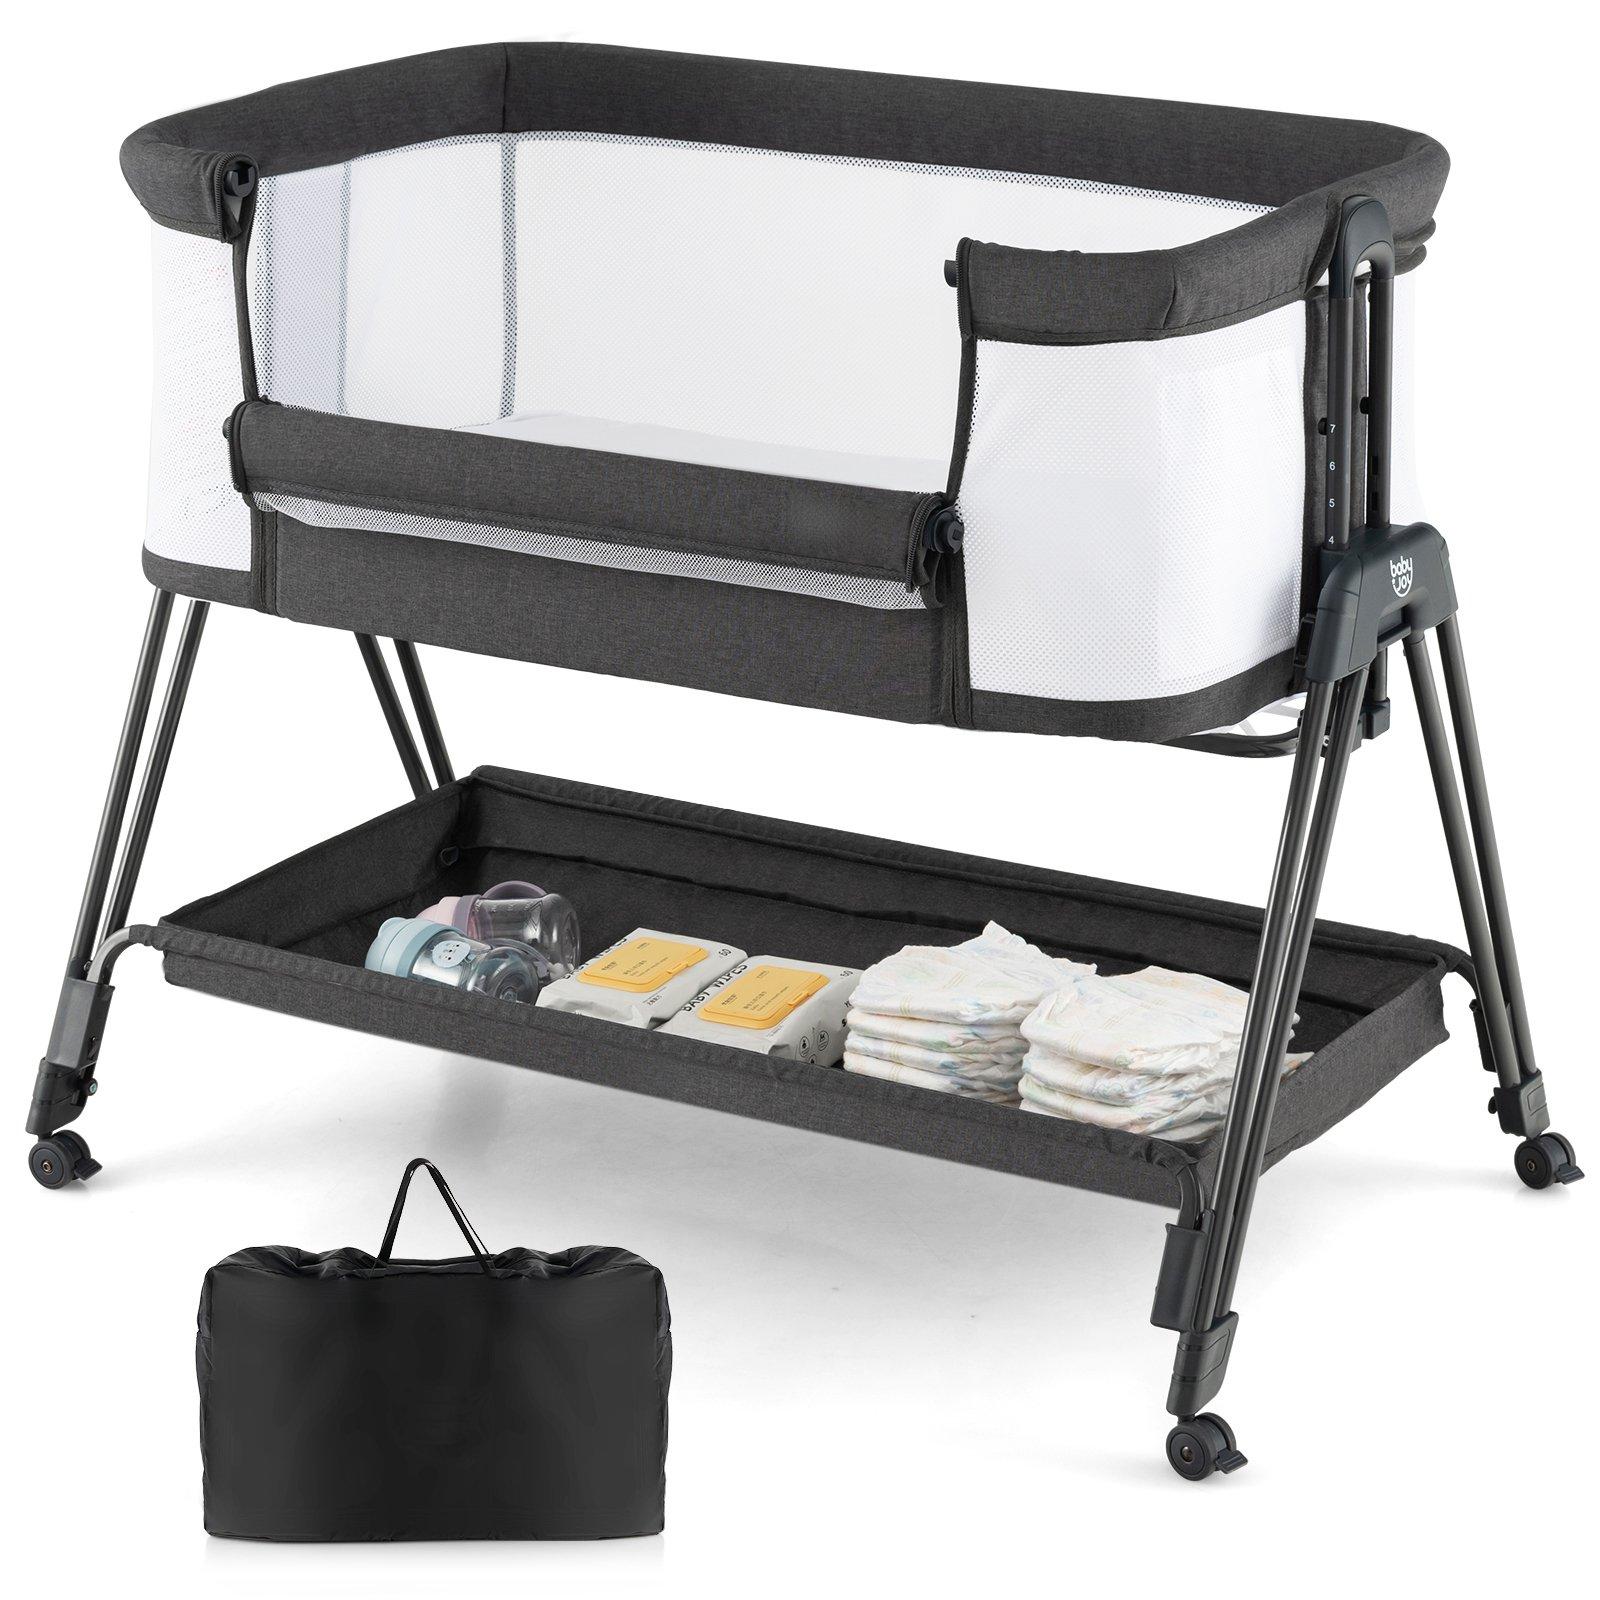 Baby Bedside Crib Folding Sleeper Bassinet Cot Bed Portable 7 Adjustable Heights